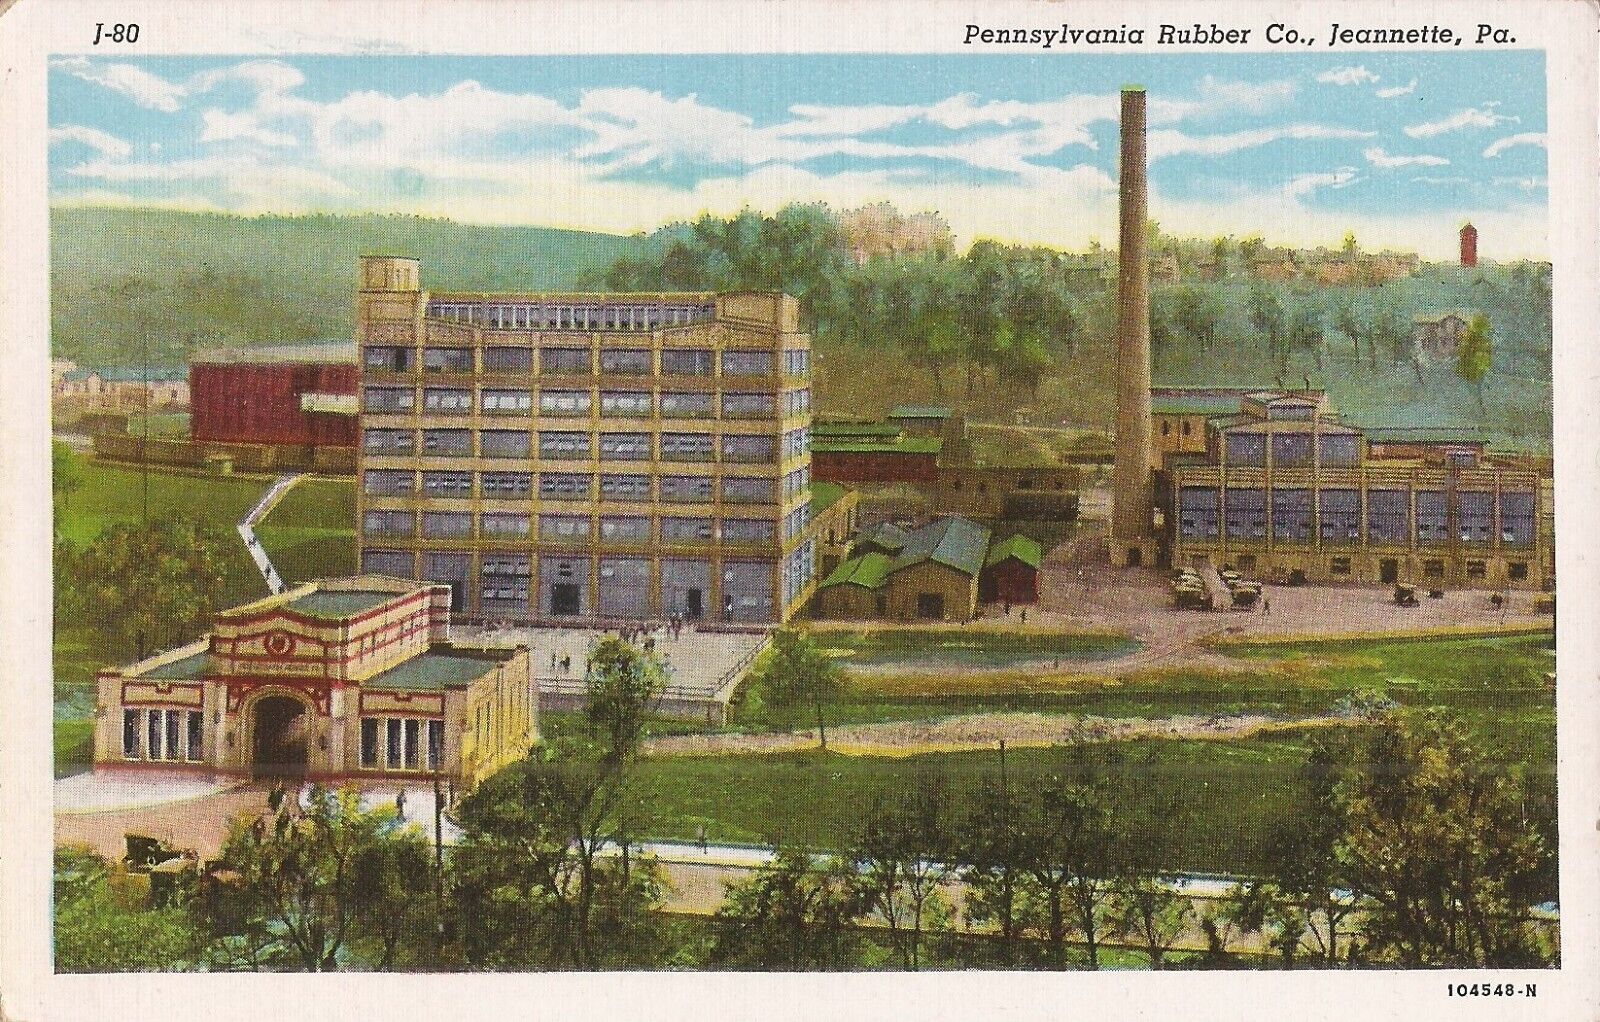 Jeanette, PA - Pennsylvania Rubber Co,